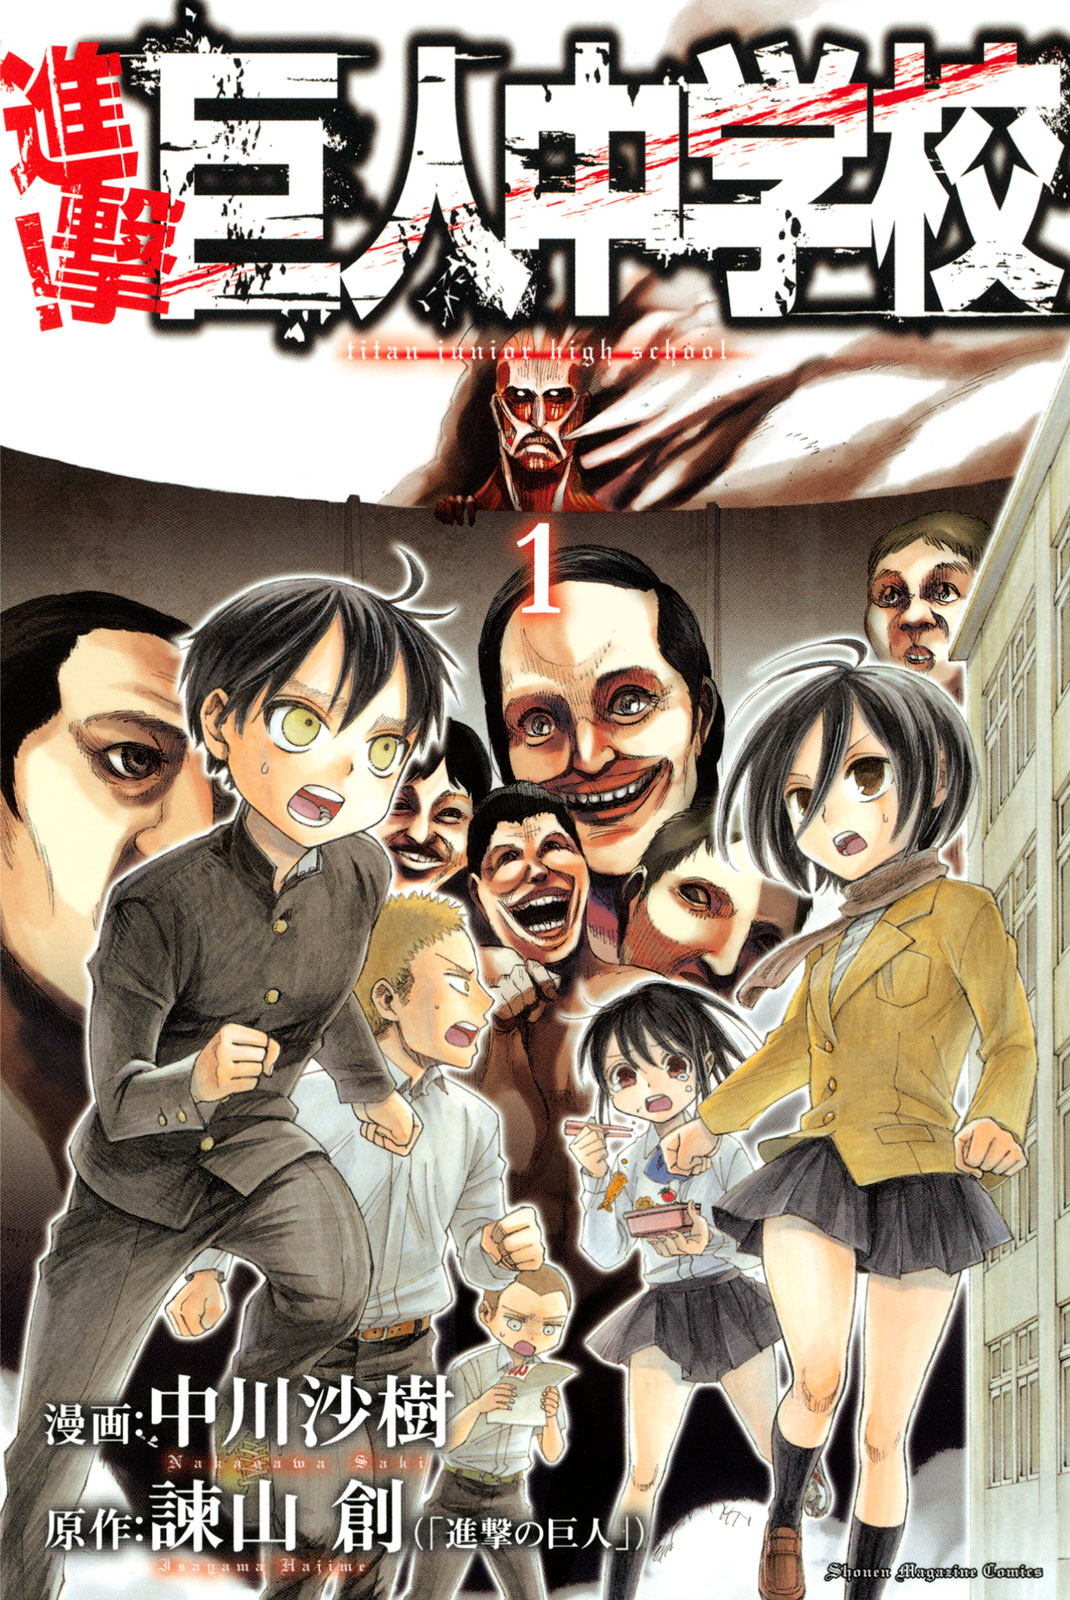 Attack on Titan: Junior High (Manga), Attack on Titan Wiki